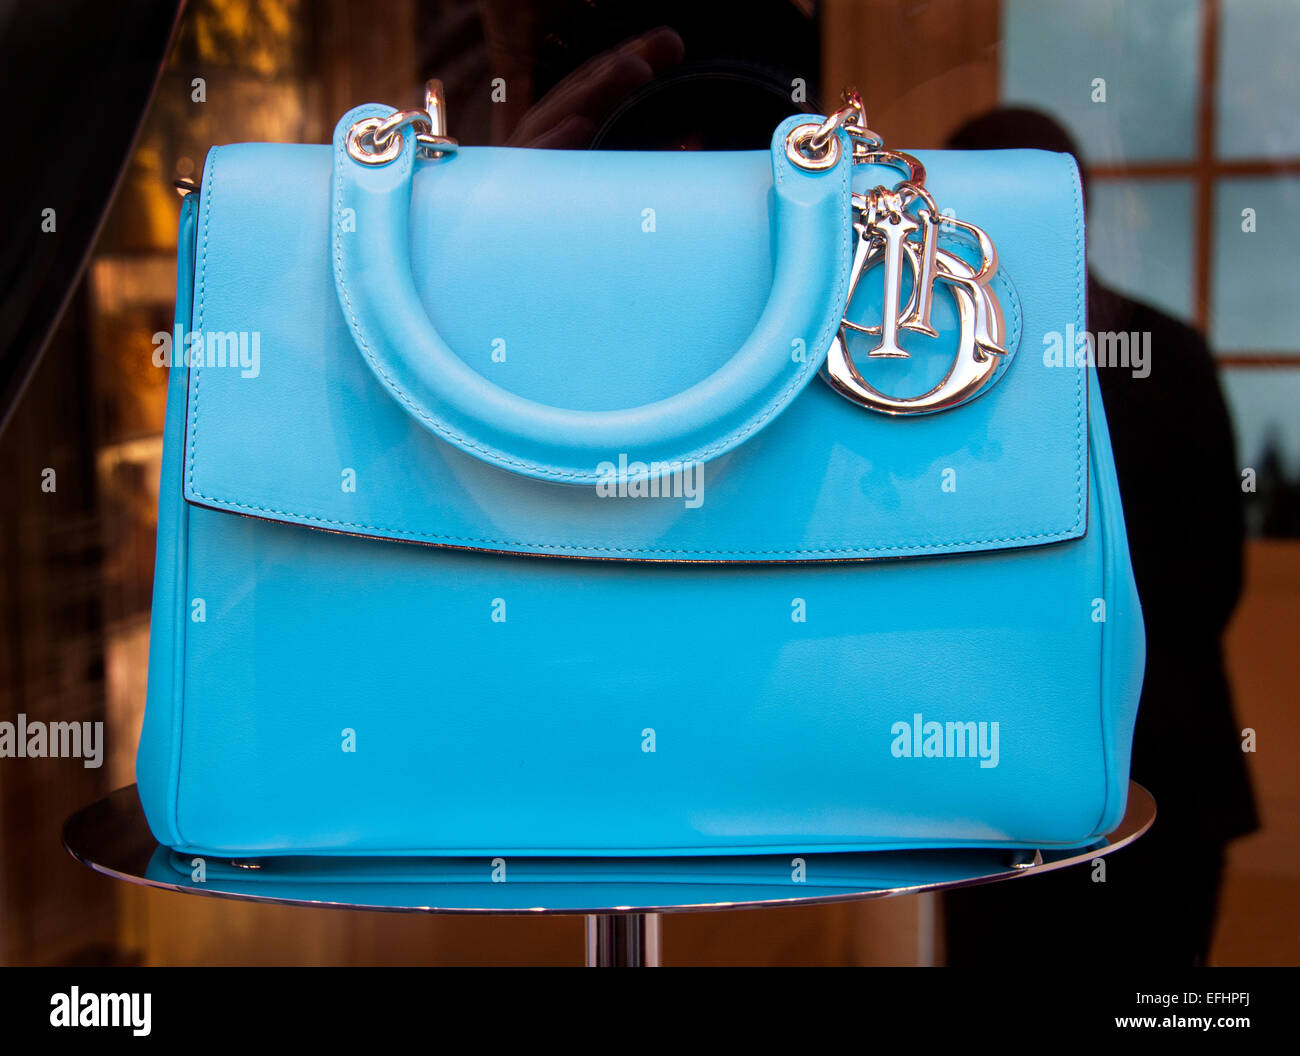 Dior handbag hi-res stock photography and images - Alamy